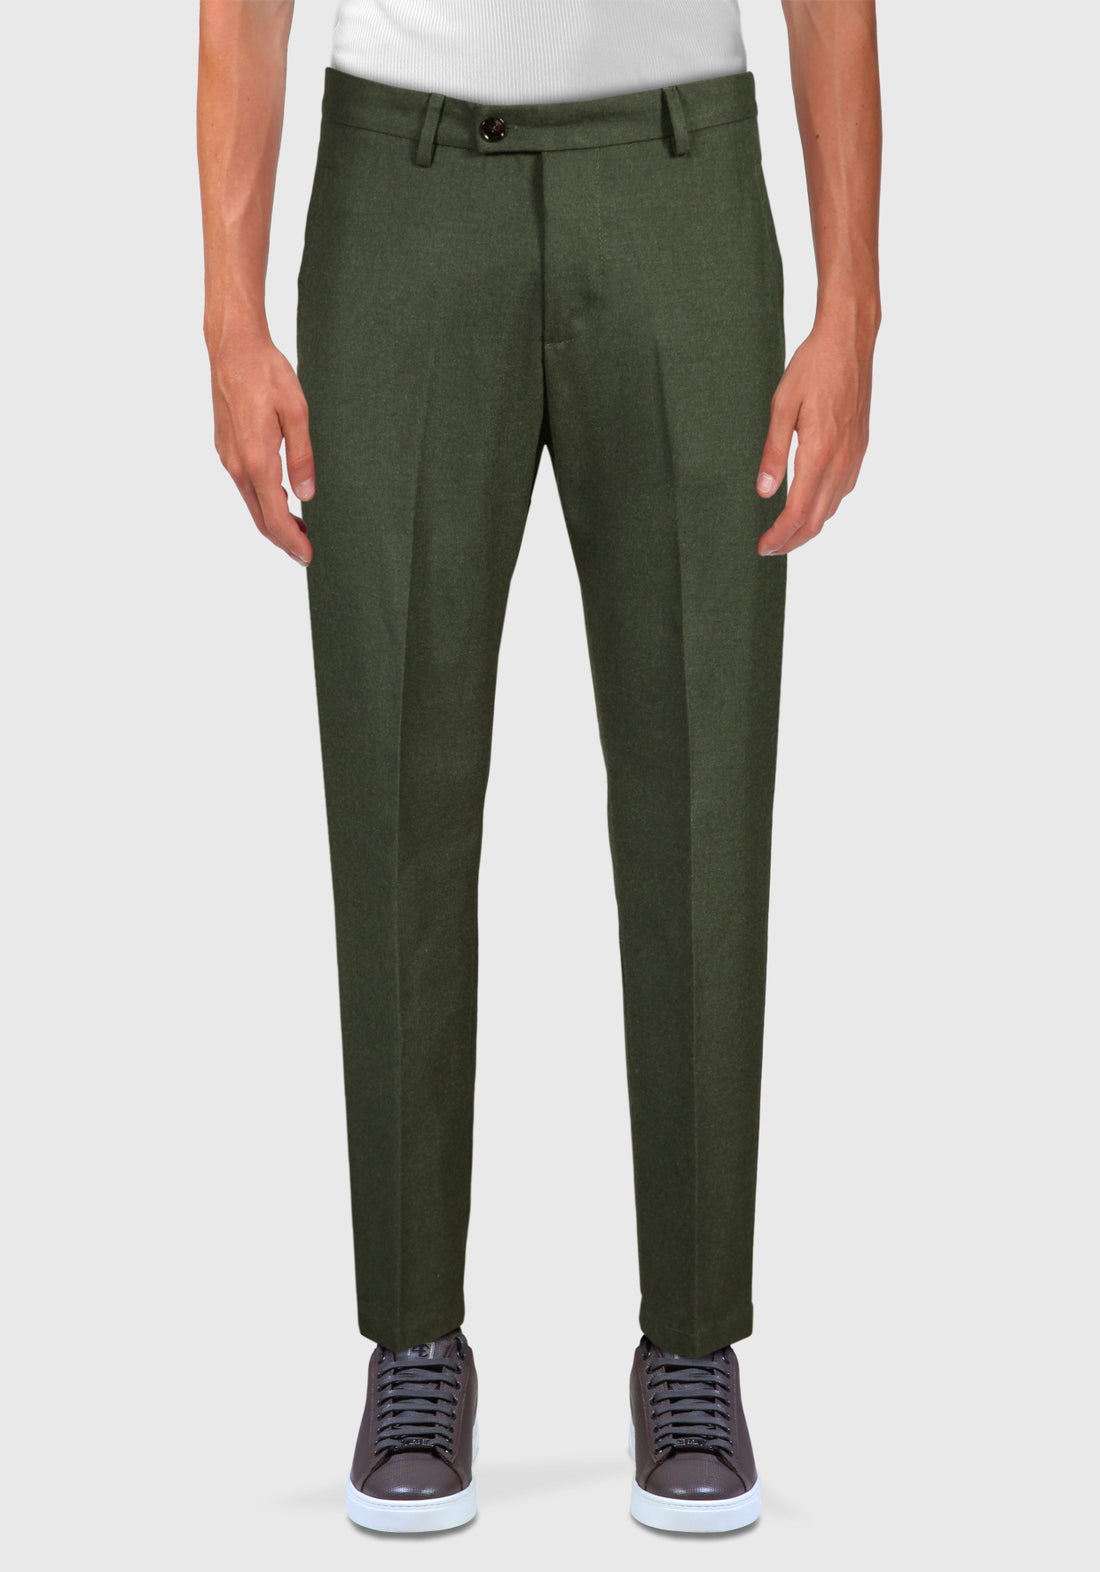 Pantalone Fresco Lana tasca a Fresco - Verde